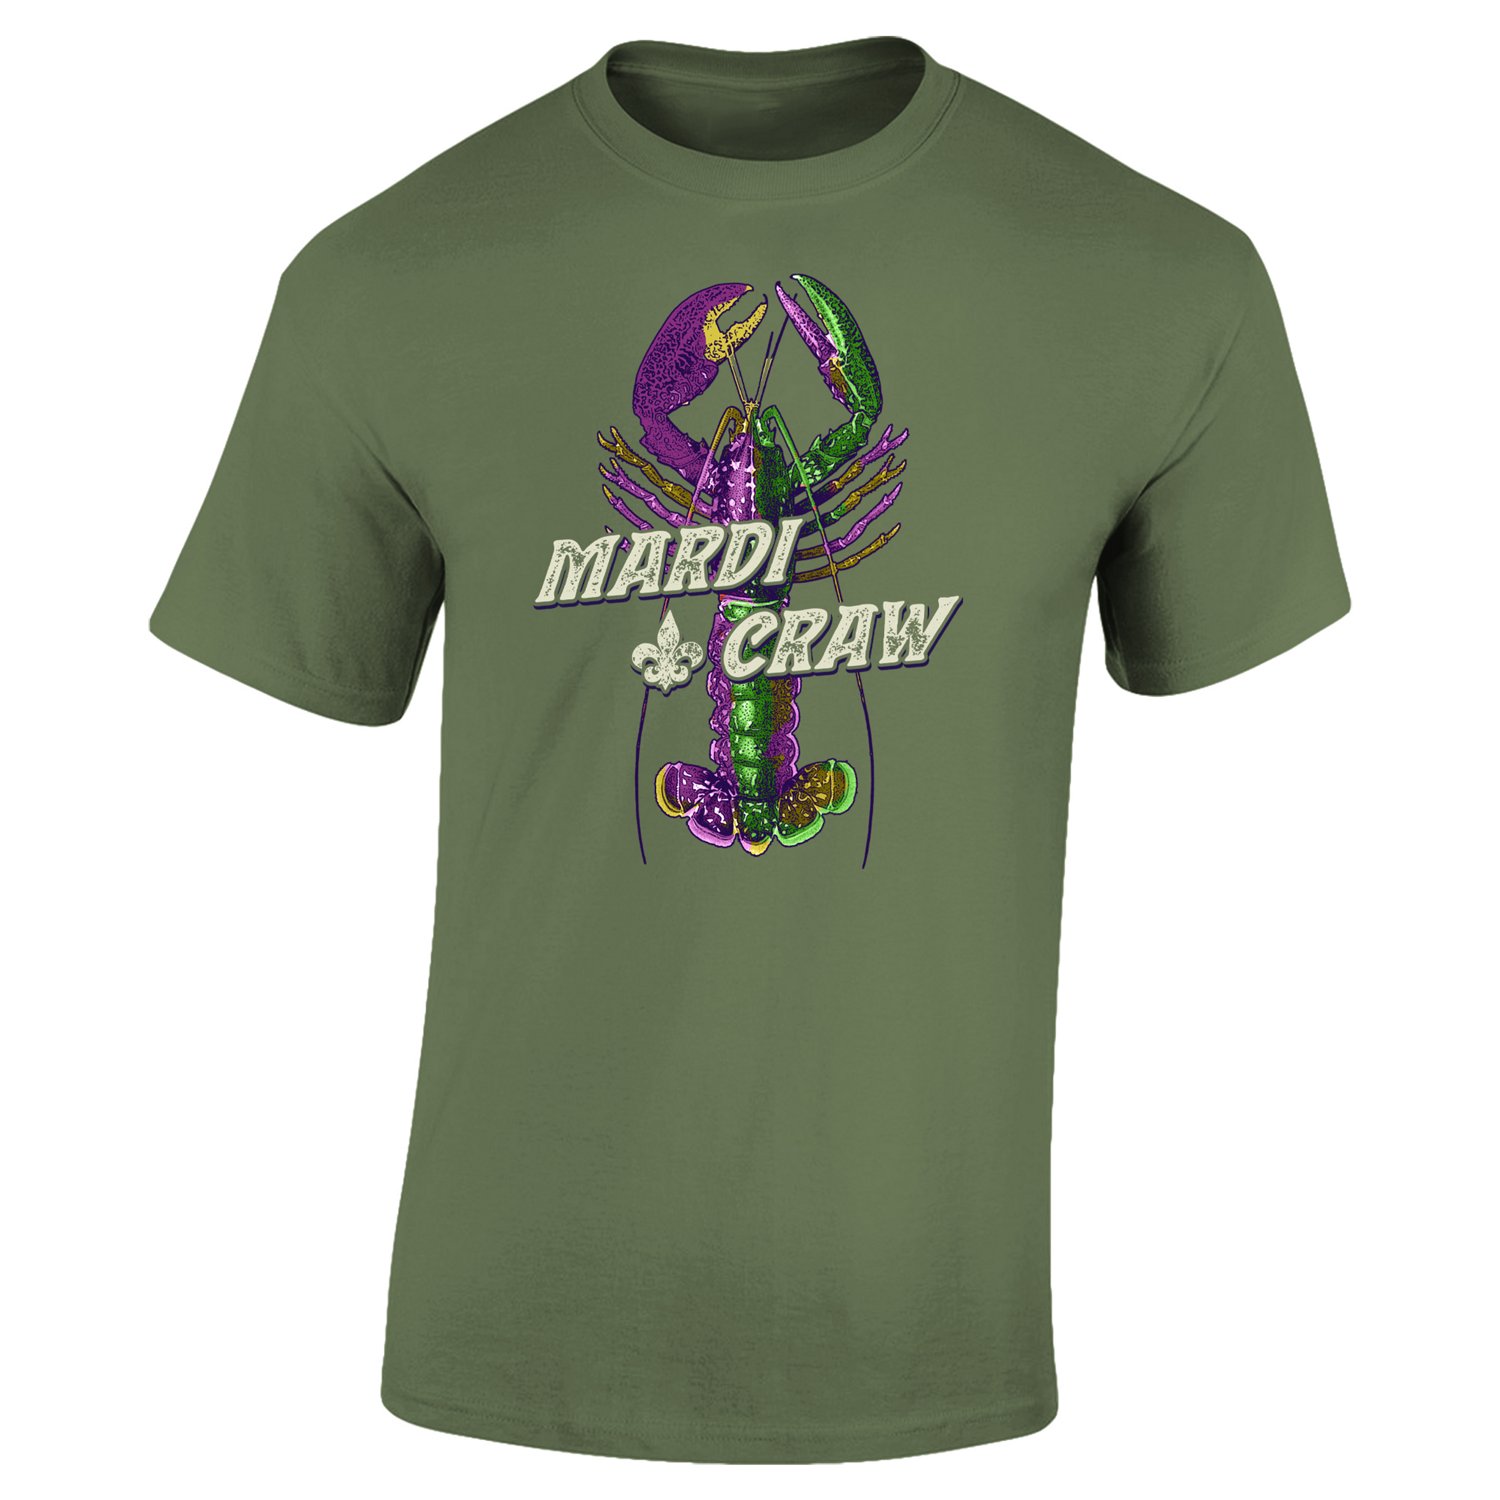 Academy Sports + Outdoors Men's Mardi Crawfish Craw T-shirt